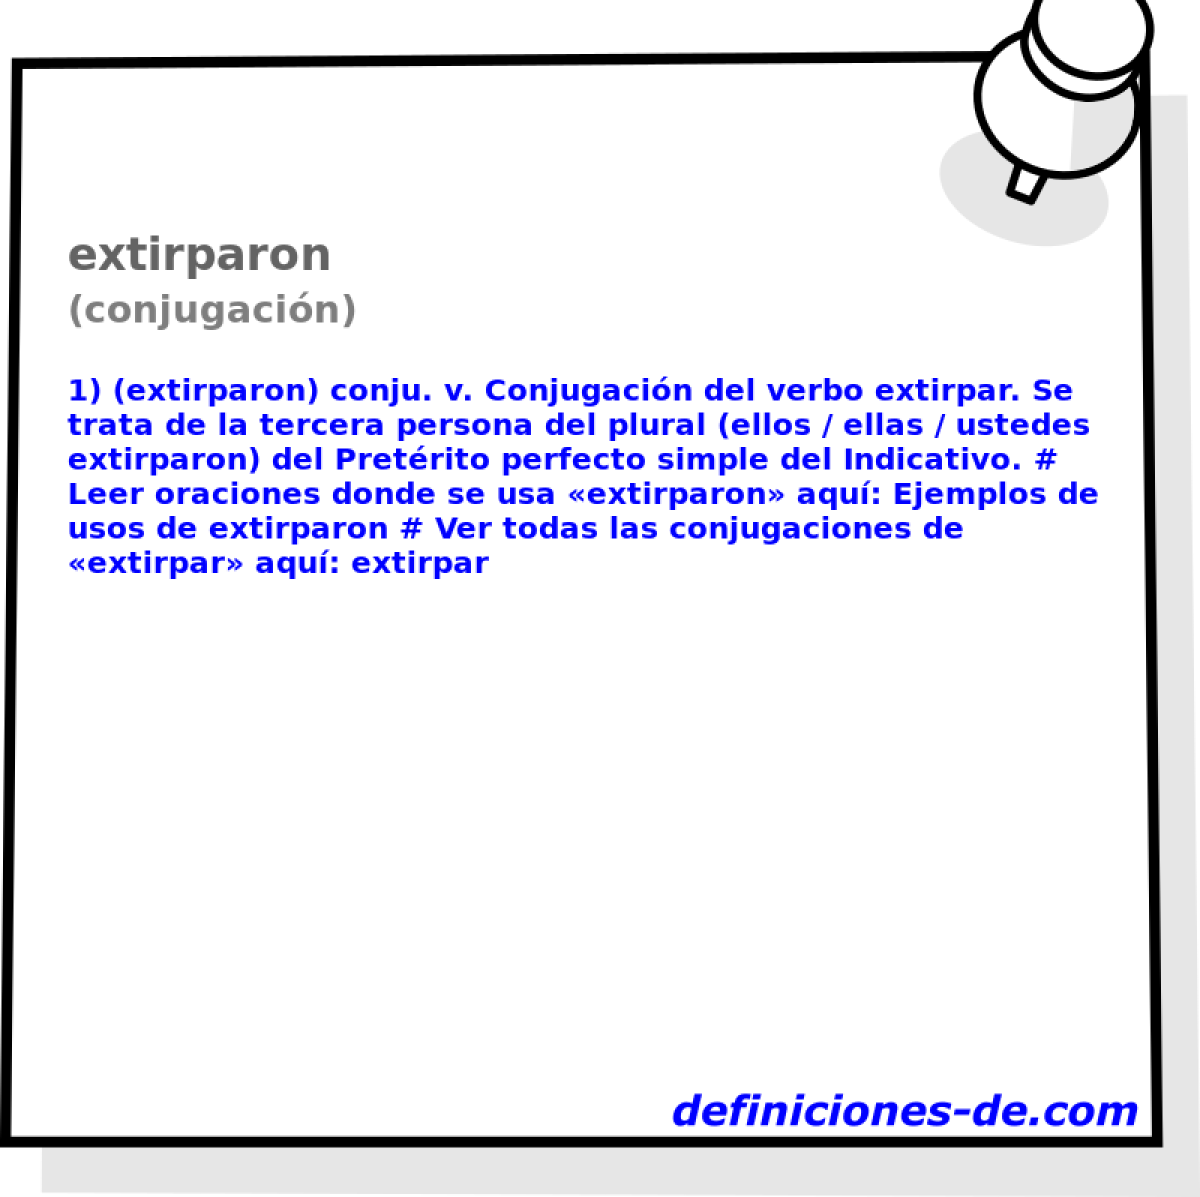 extirparon (conjugacin)